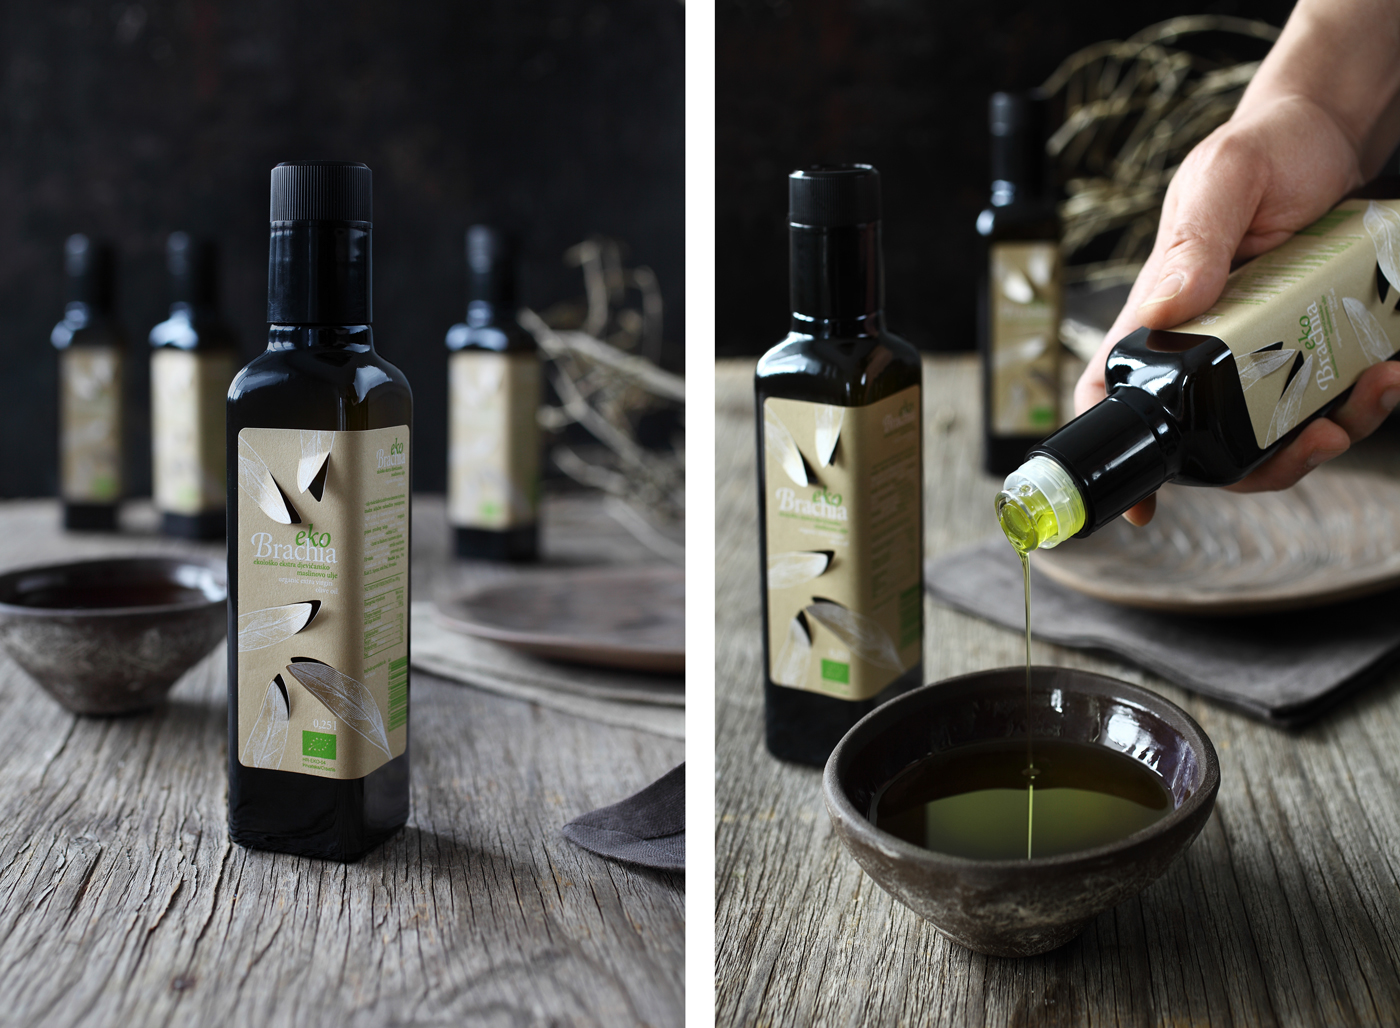 Brachia ekoBrachia product identity Olive Oil organic